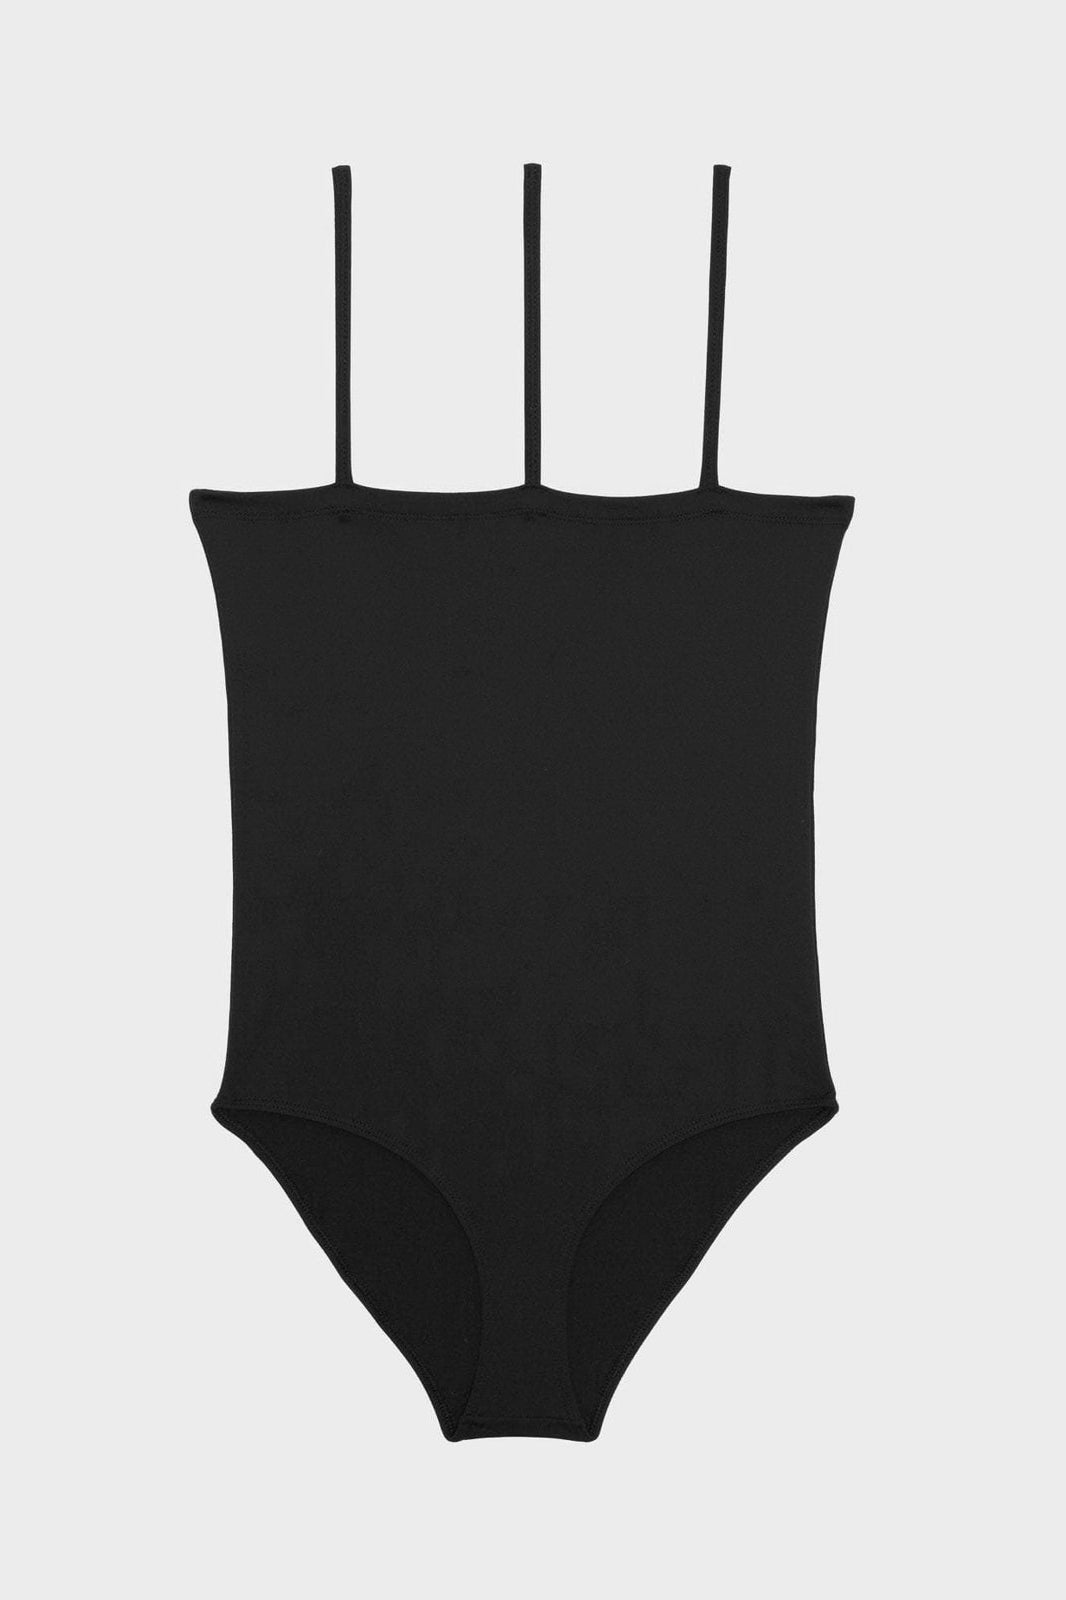 Nida Swimsuit in Black by Baserange